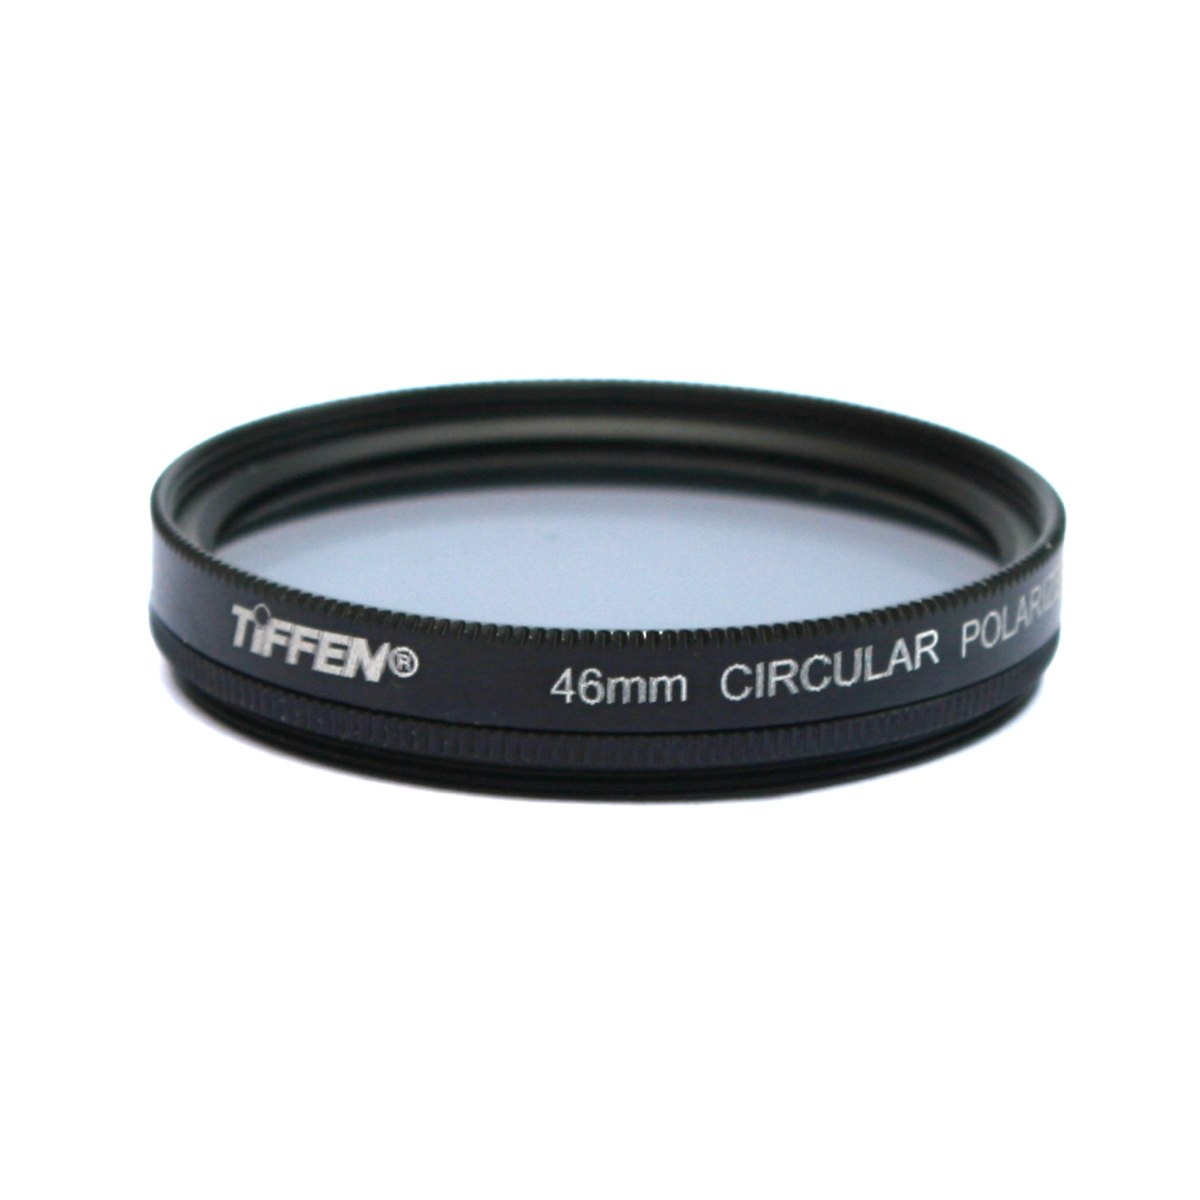 Tiffen 46mm Circular Polarizer Filter